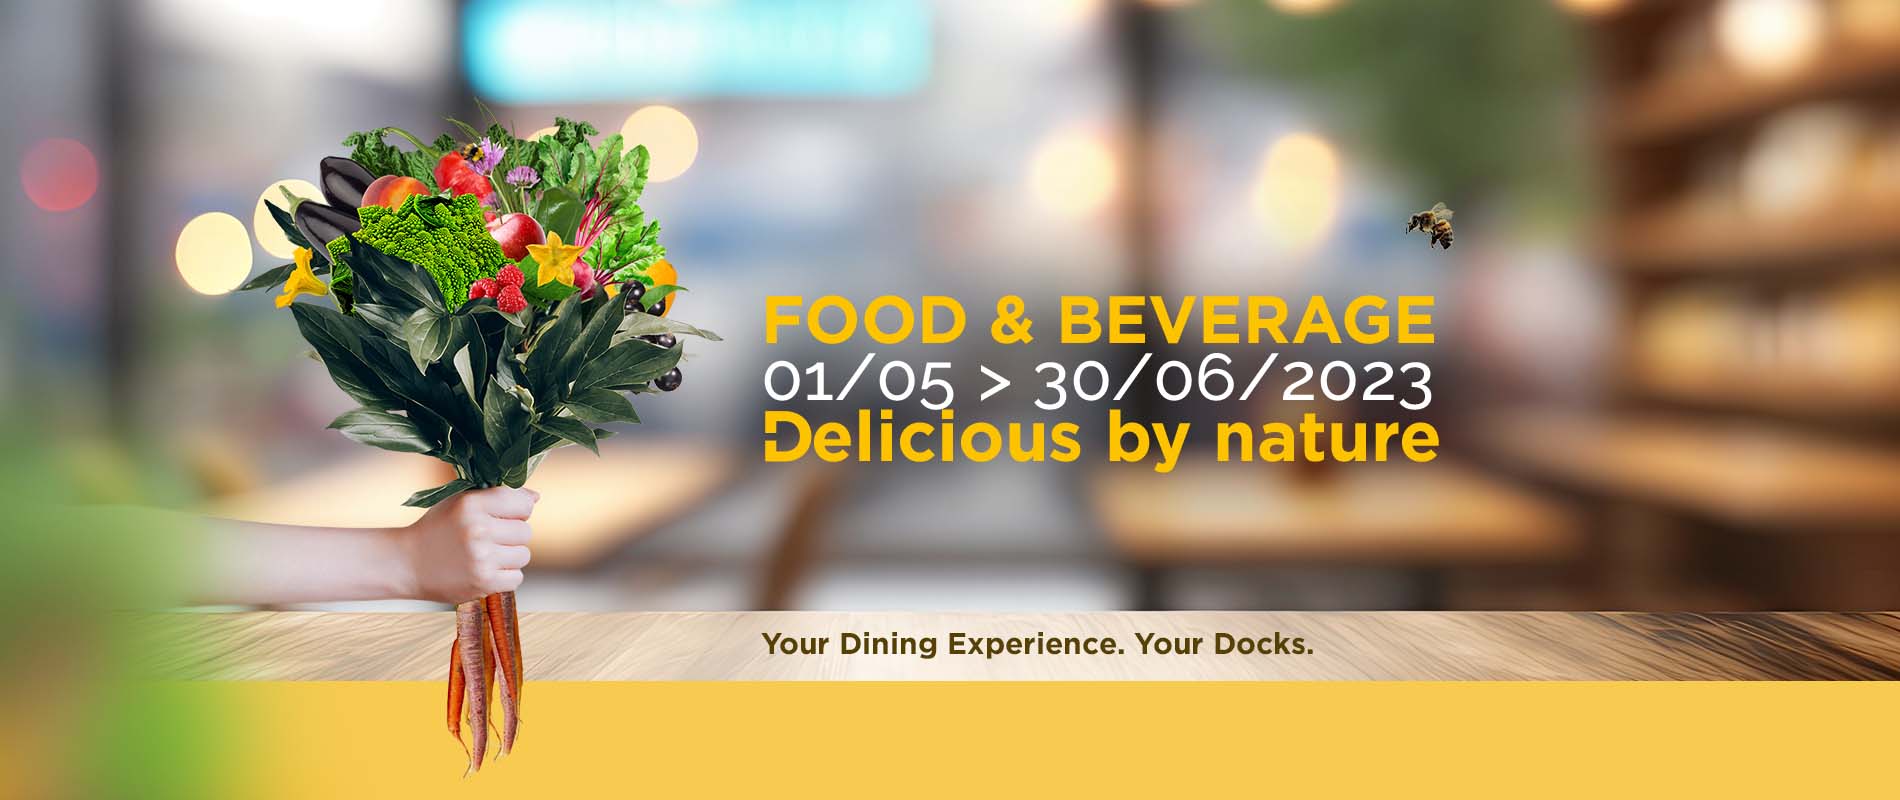 Food & Beverage at Docks Bruxsel